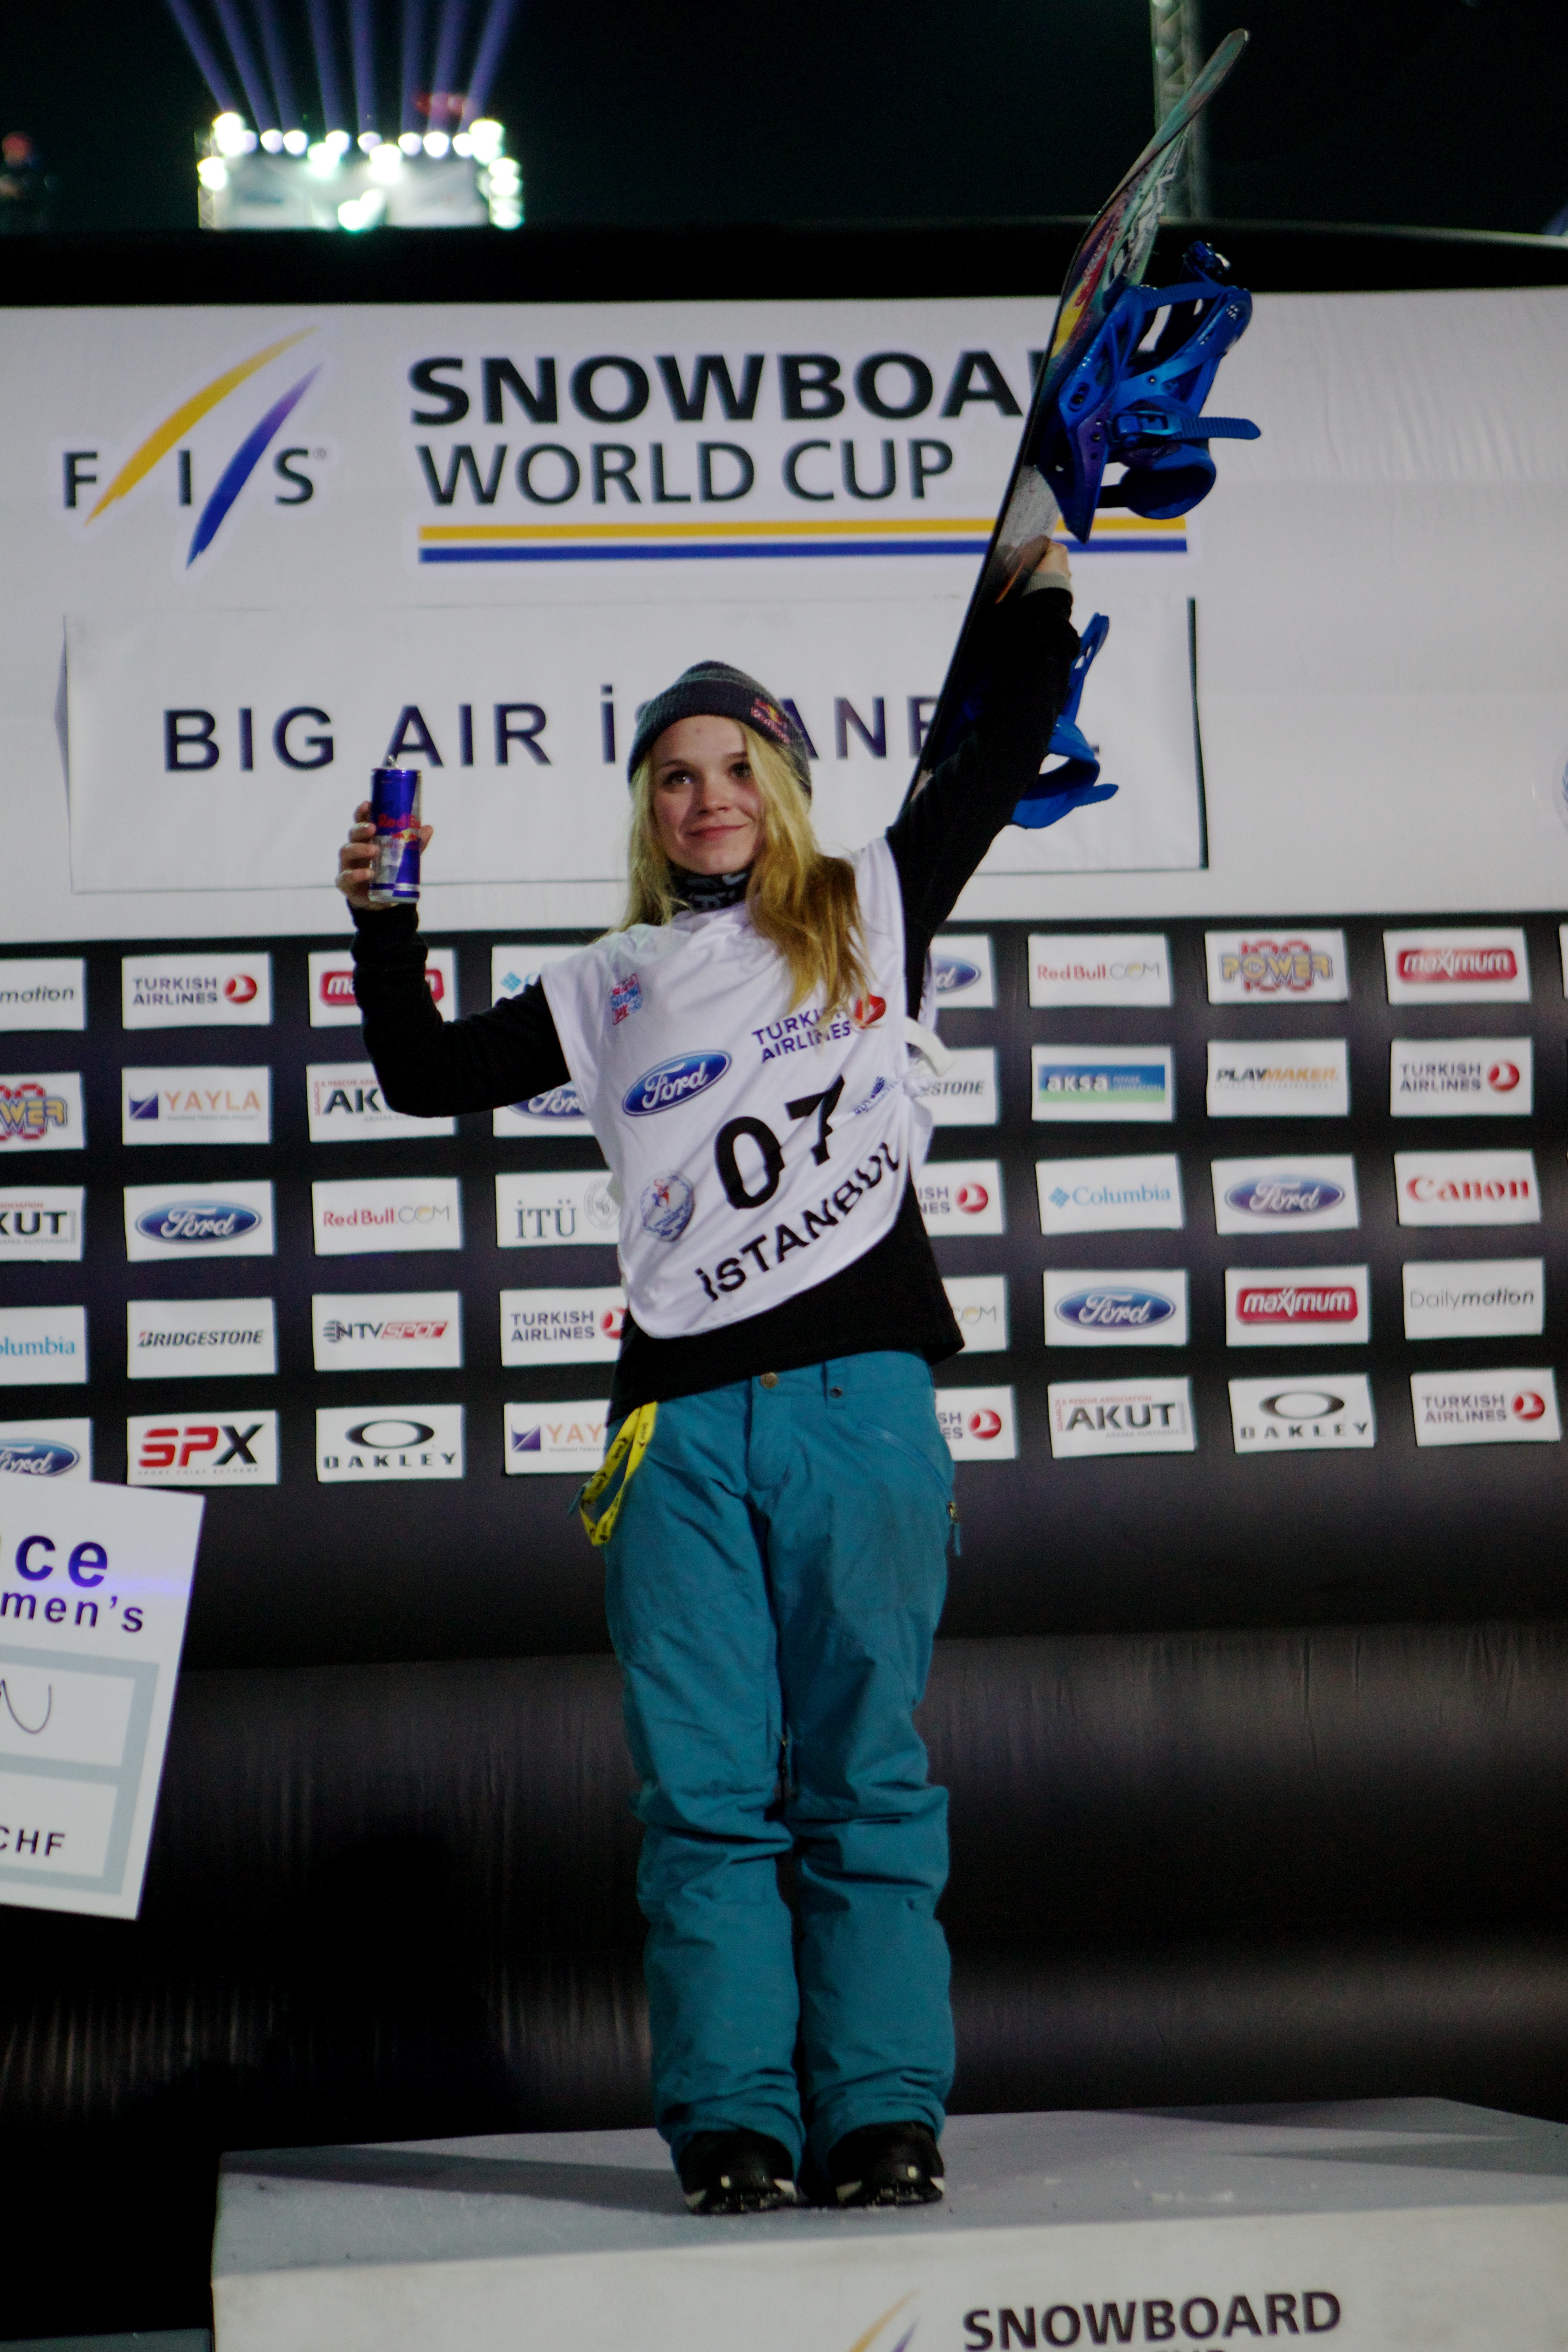 FIS SNOWBOARD WORLD CUP BIG AIR - İSTANBUL